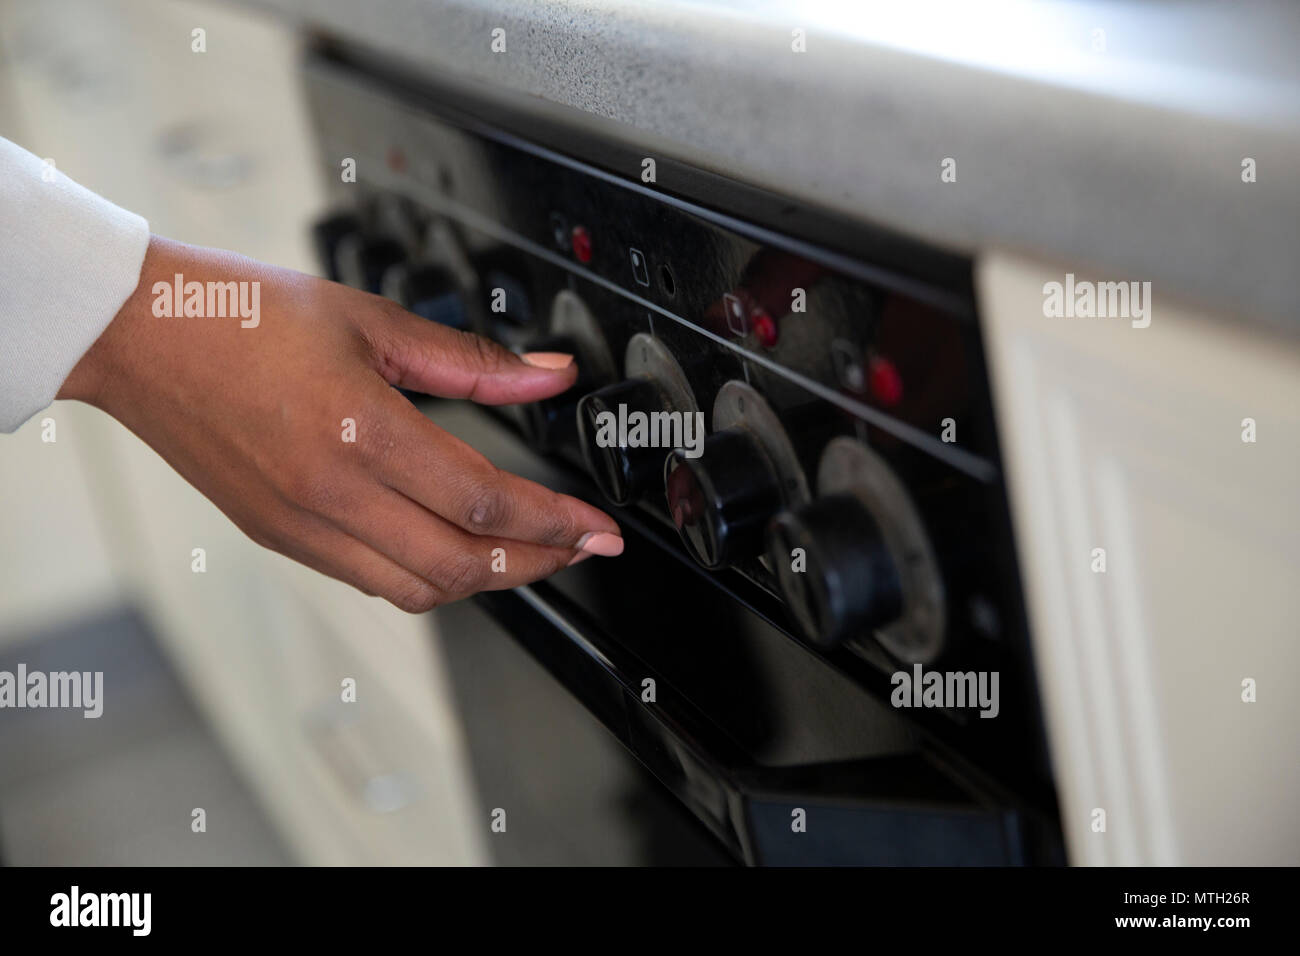 Woman turning on stove Stock Photo